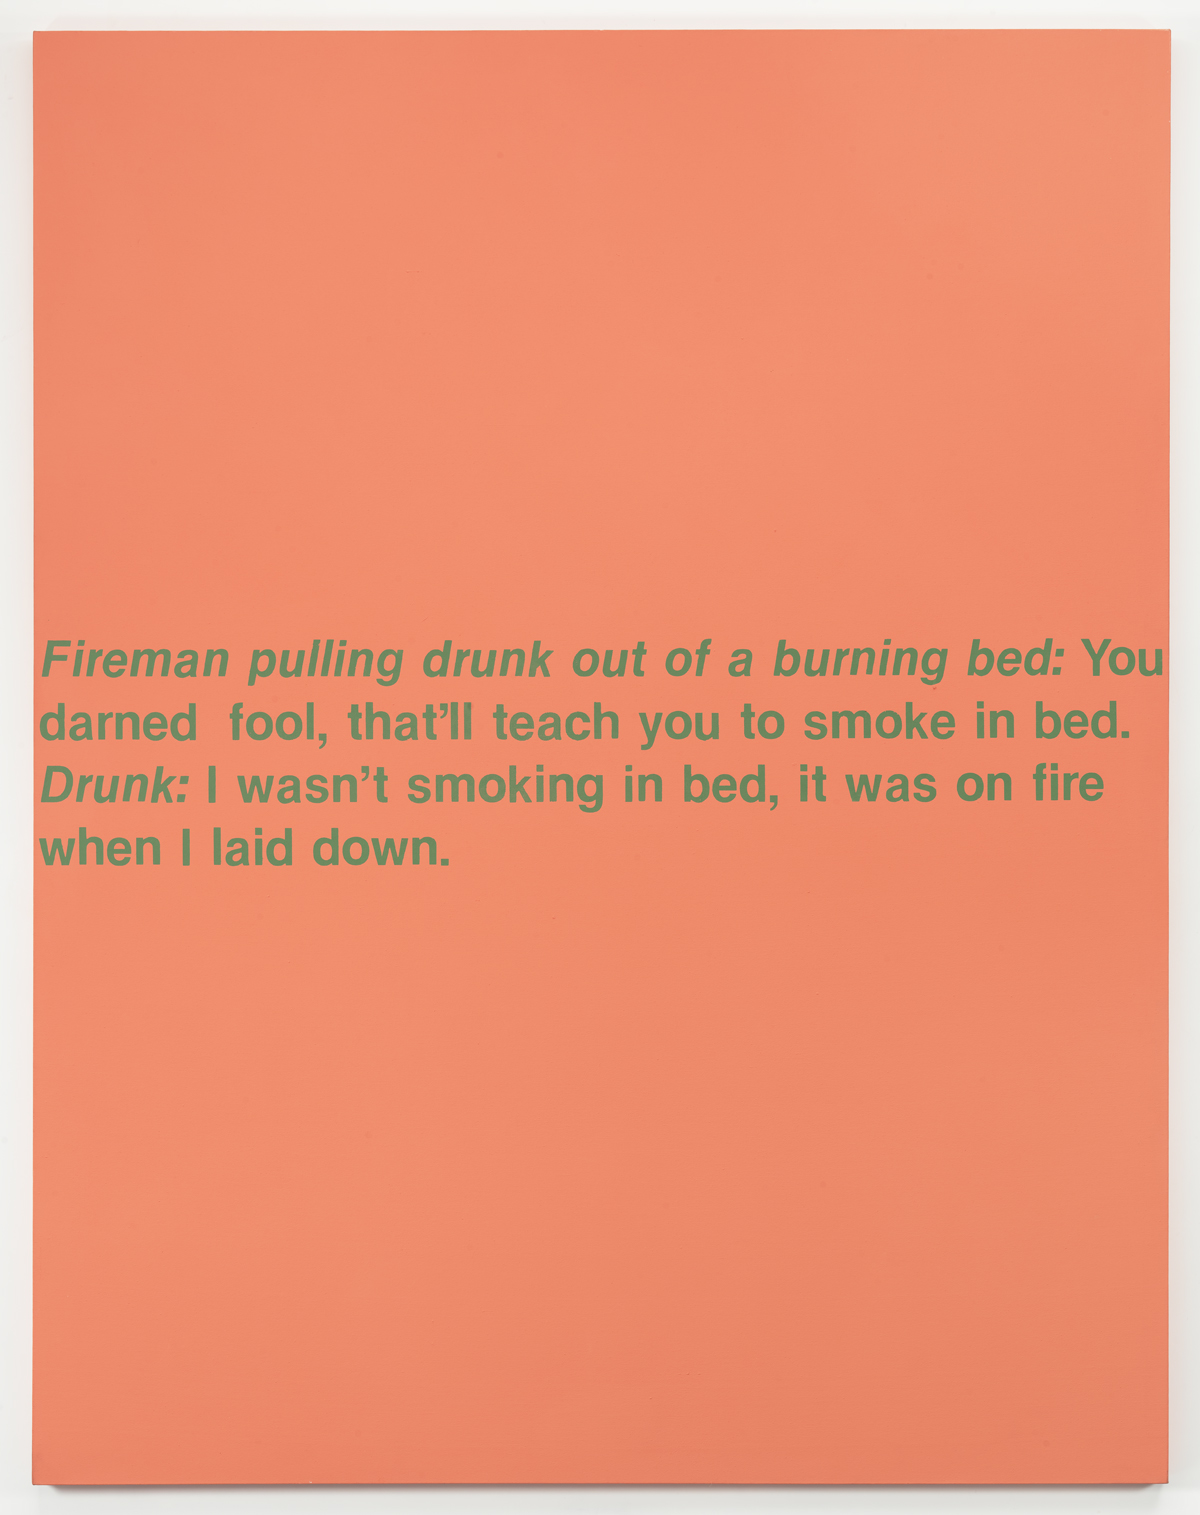 Fireman and Drunk, 1989